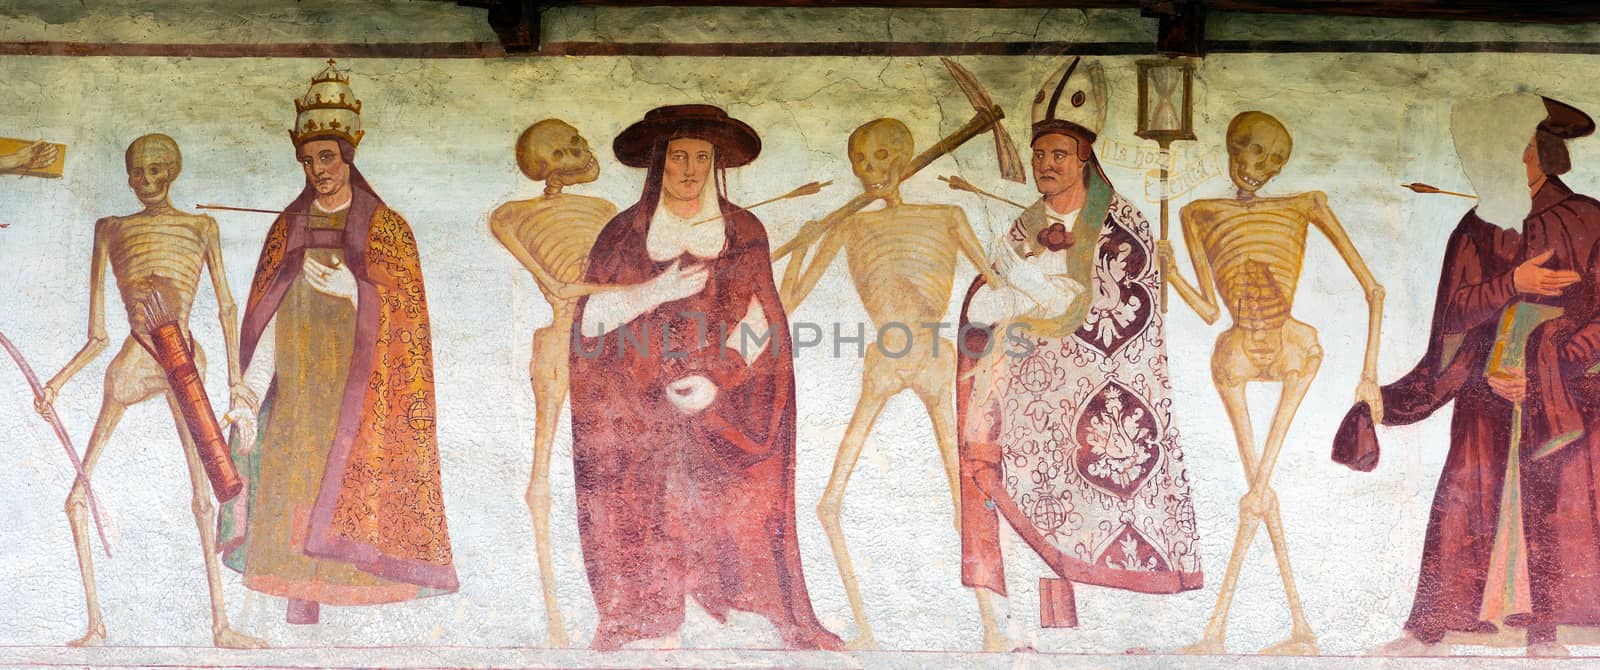 Fresco Macabre Dance - Pinzolo Trento Italy by catalby